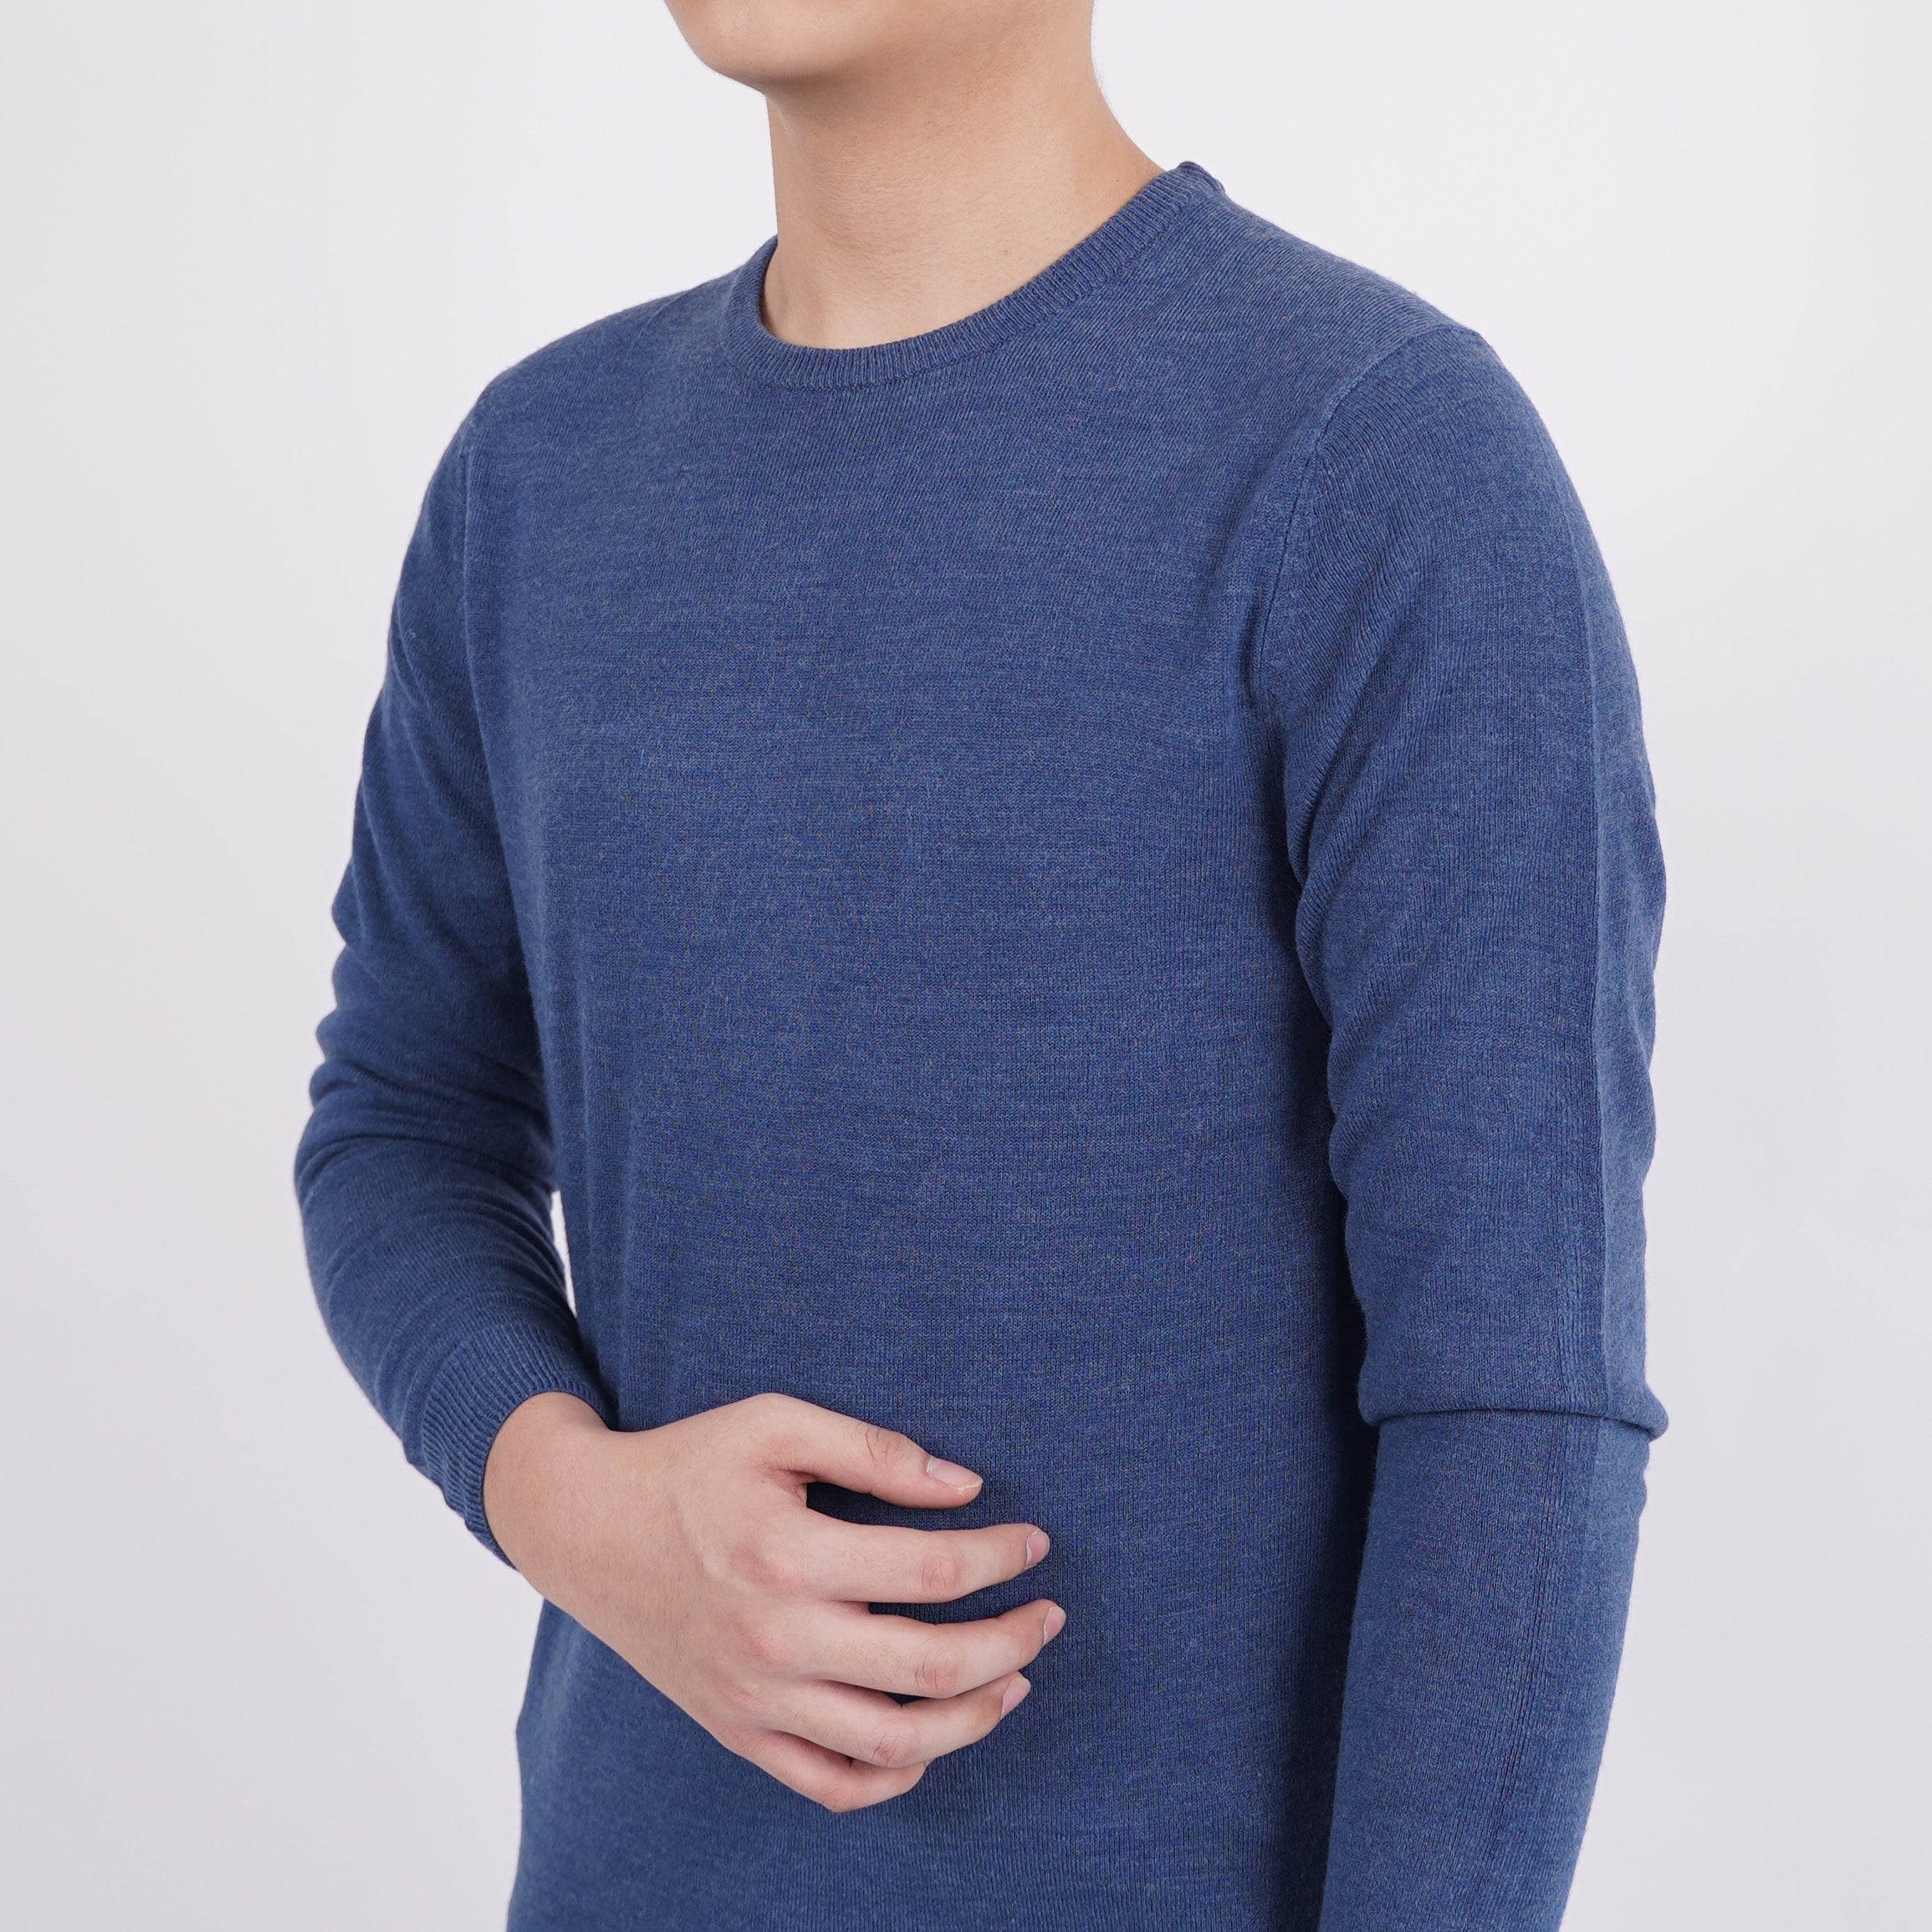 Sweatshirt Unisex- Round Neck Casual in 4 Colors [CG-FNF 01]